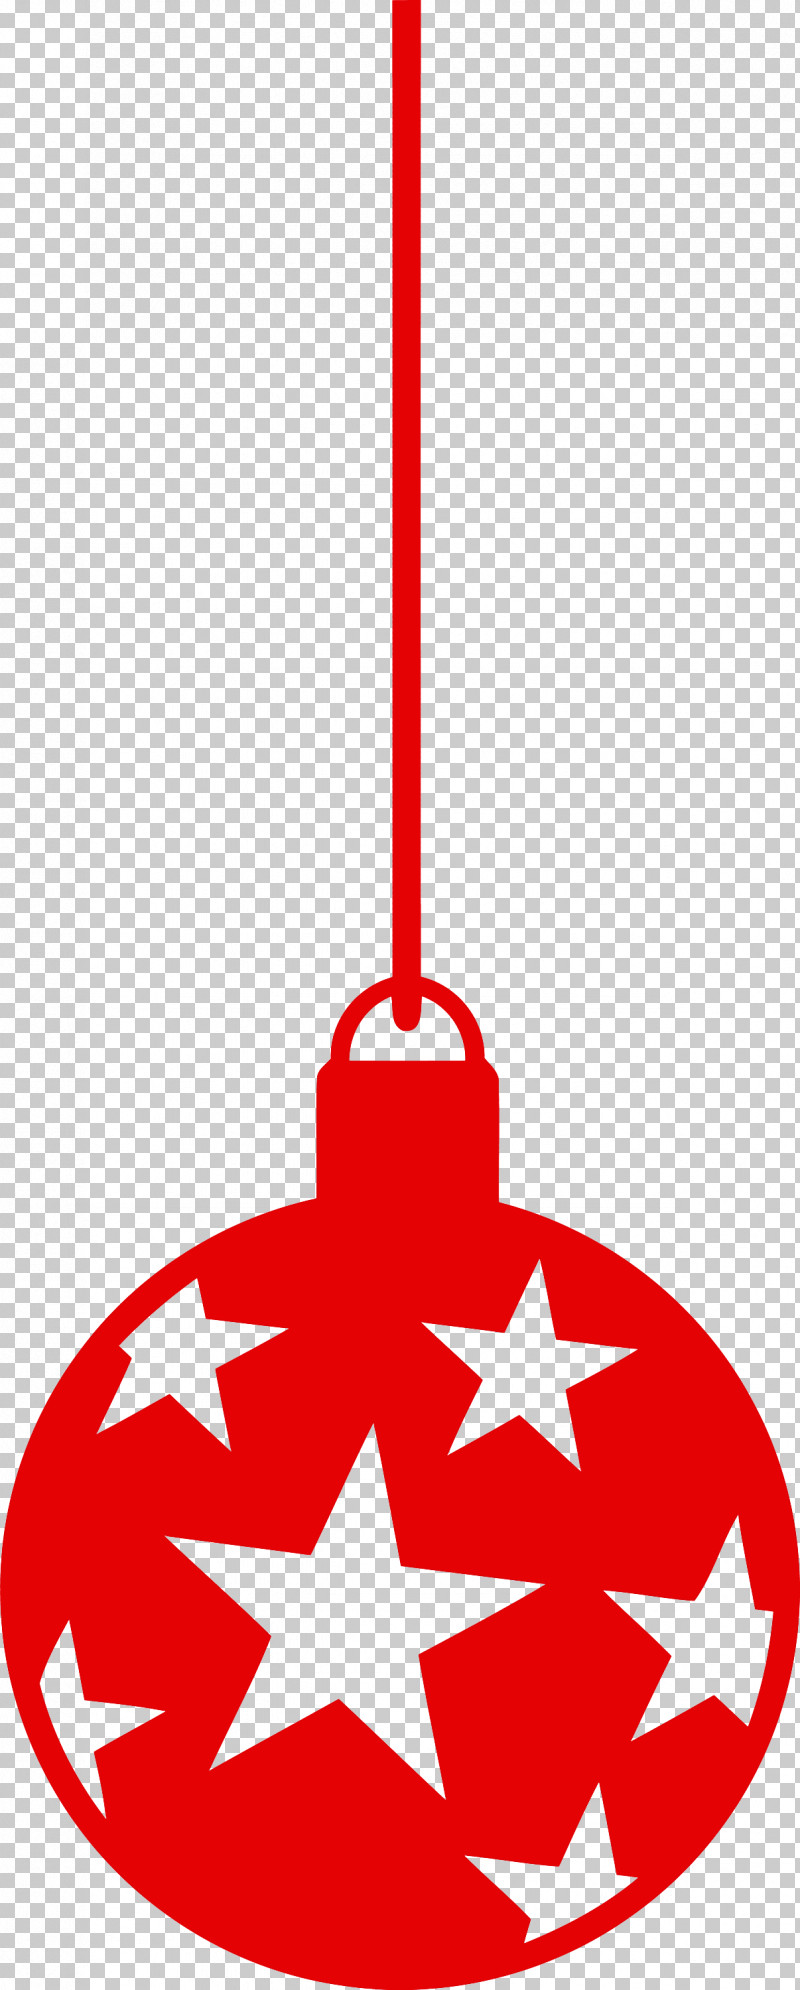 Christmas Ornament PNG, Clipart, Christmas Ornament, Flag, Holiday Ornament, Ornament, Red Free PNG Download